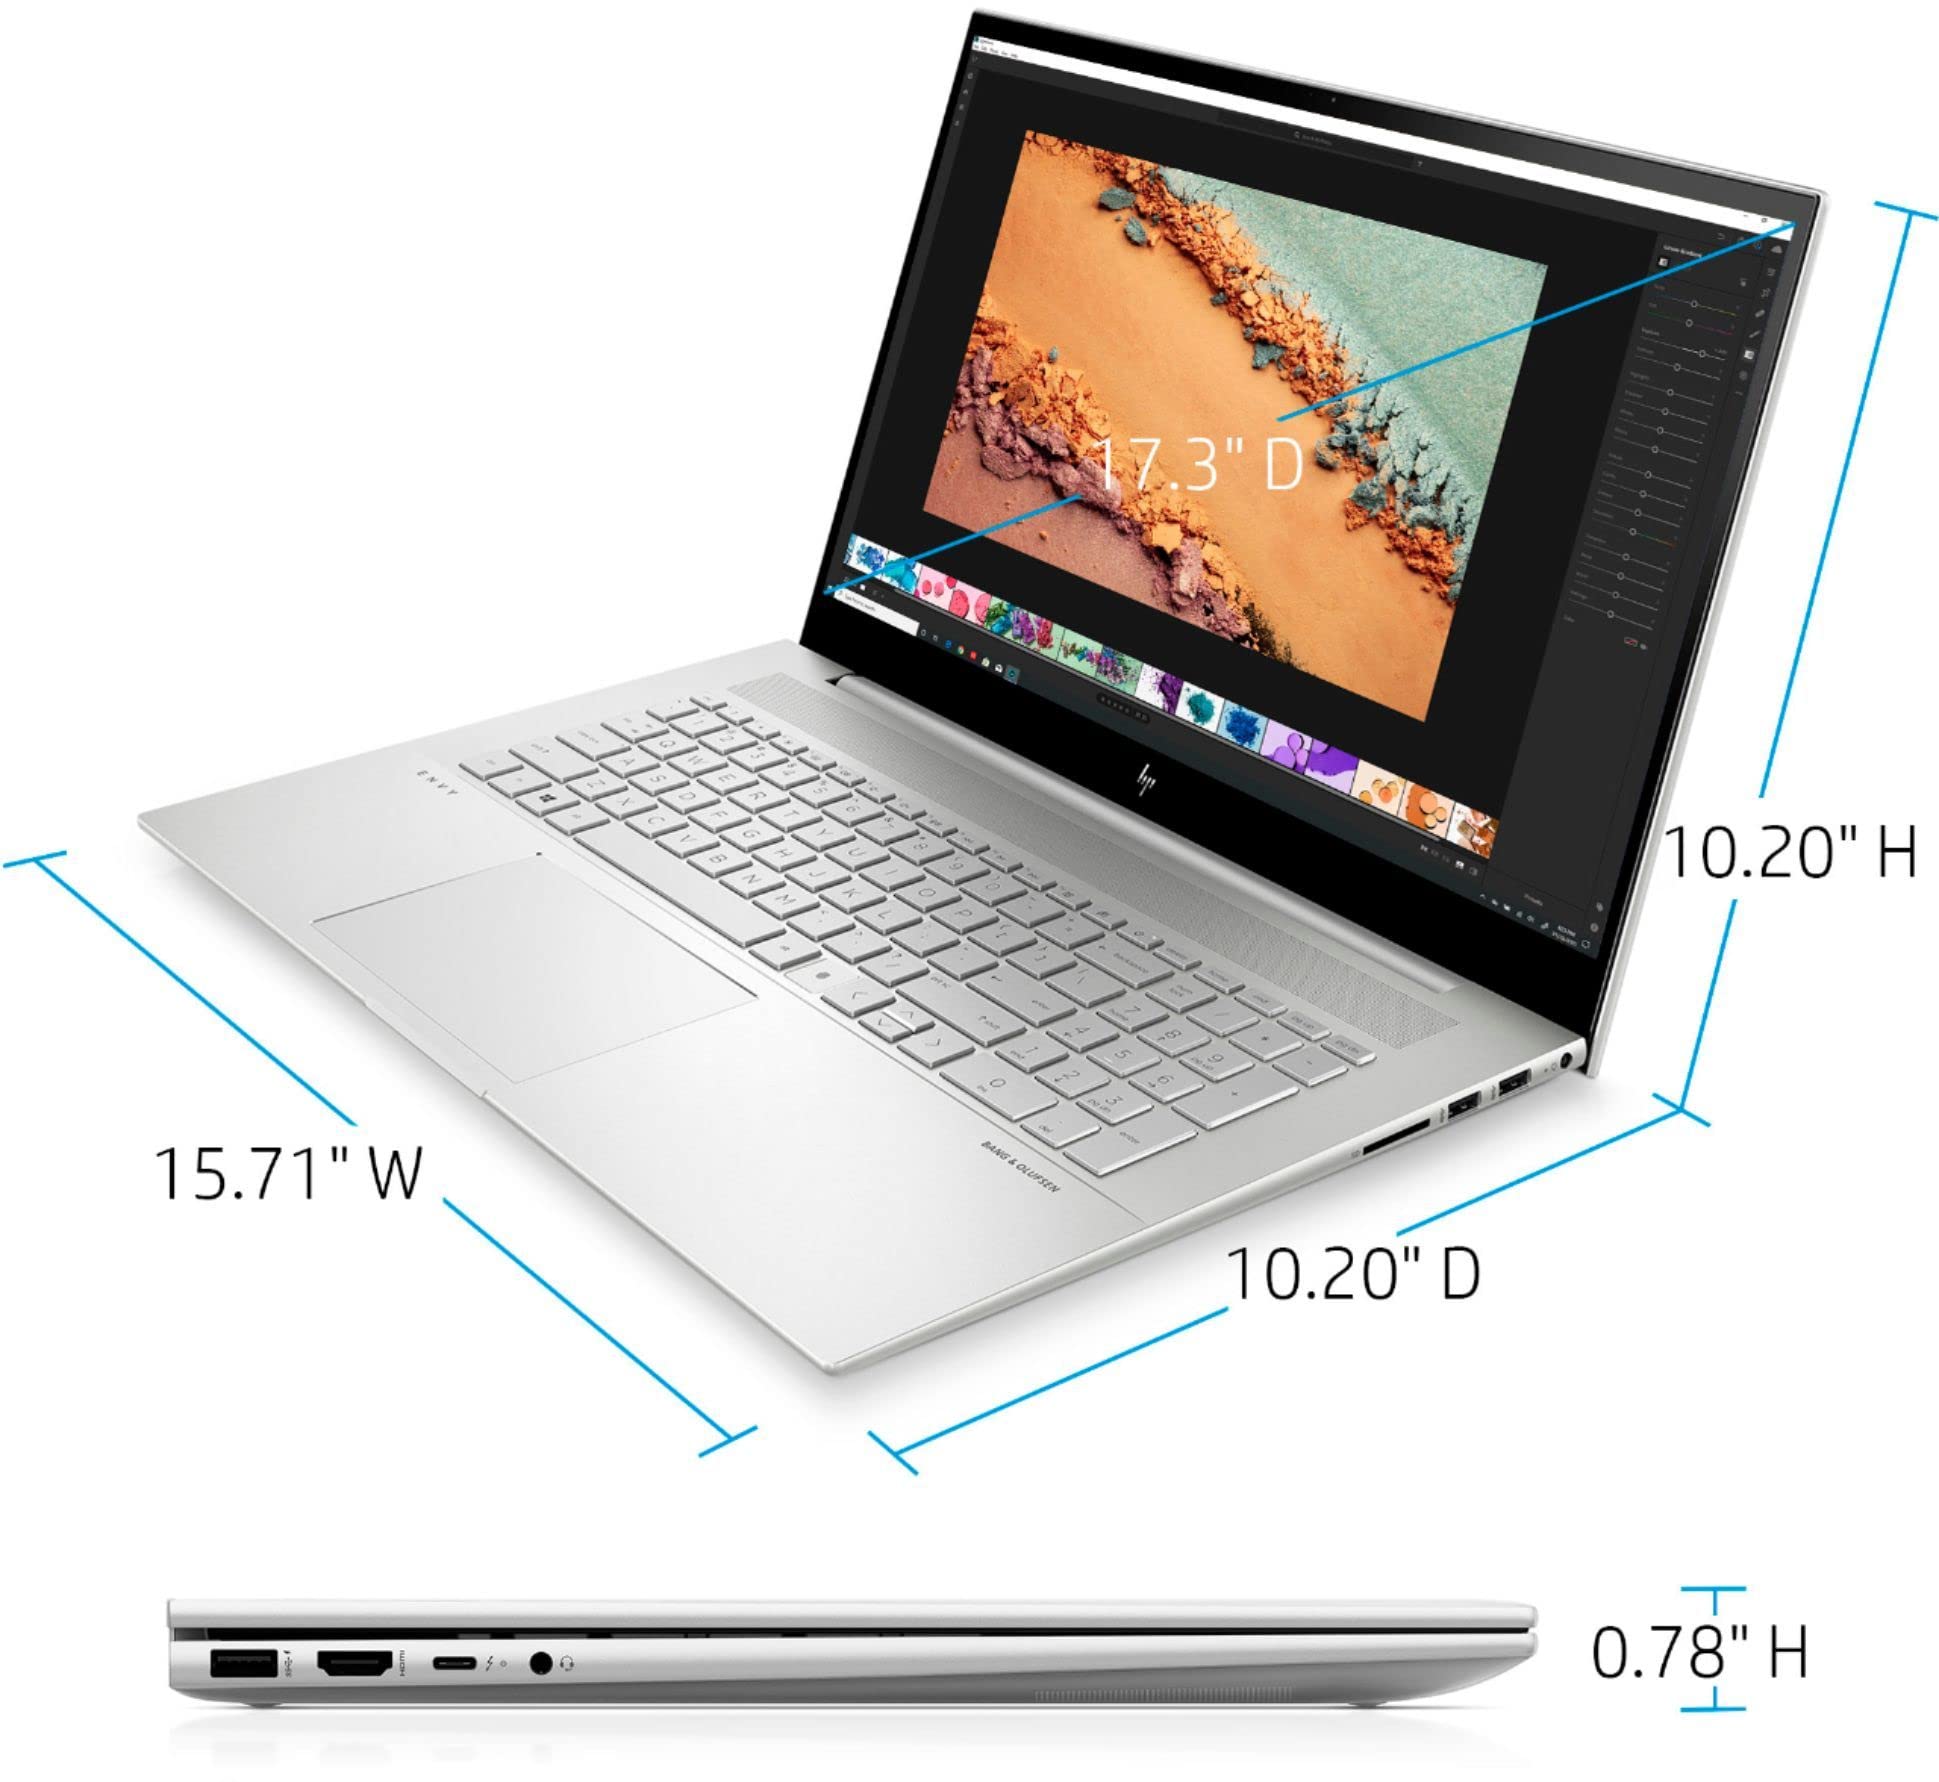 Latest HP Envy Laptop | 17.3